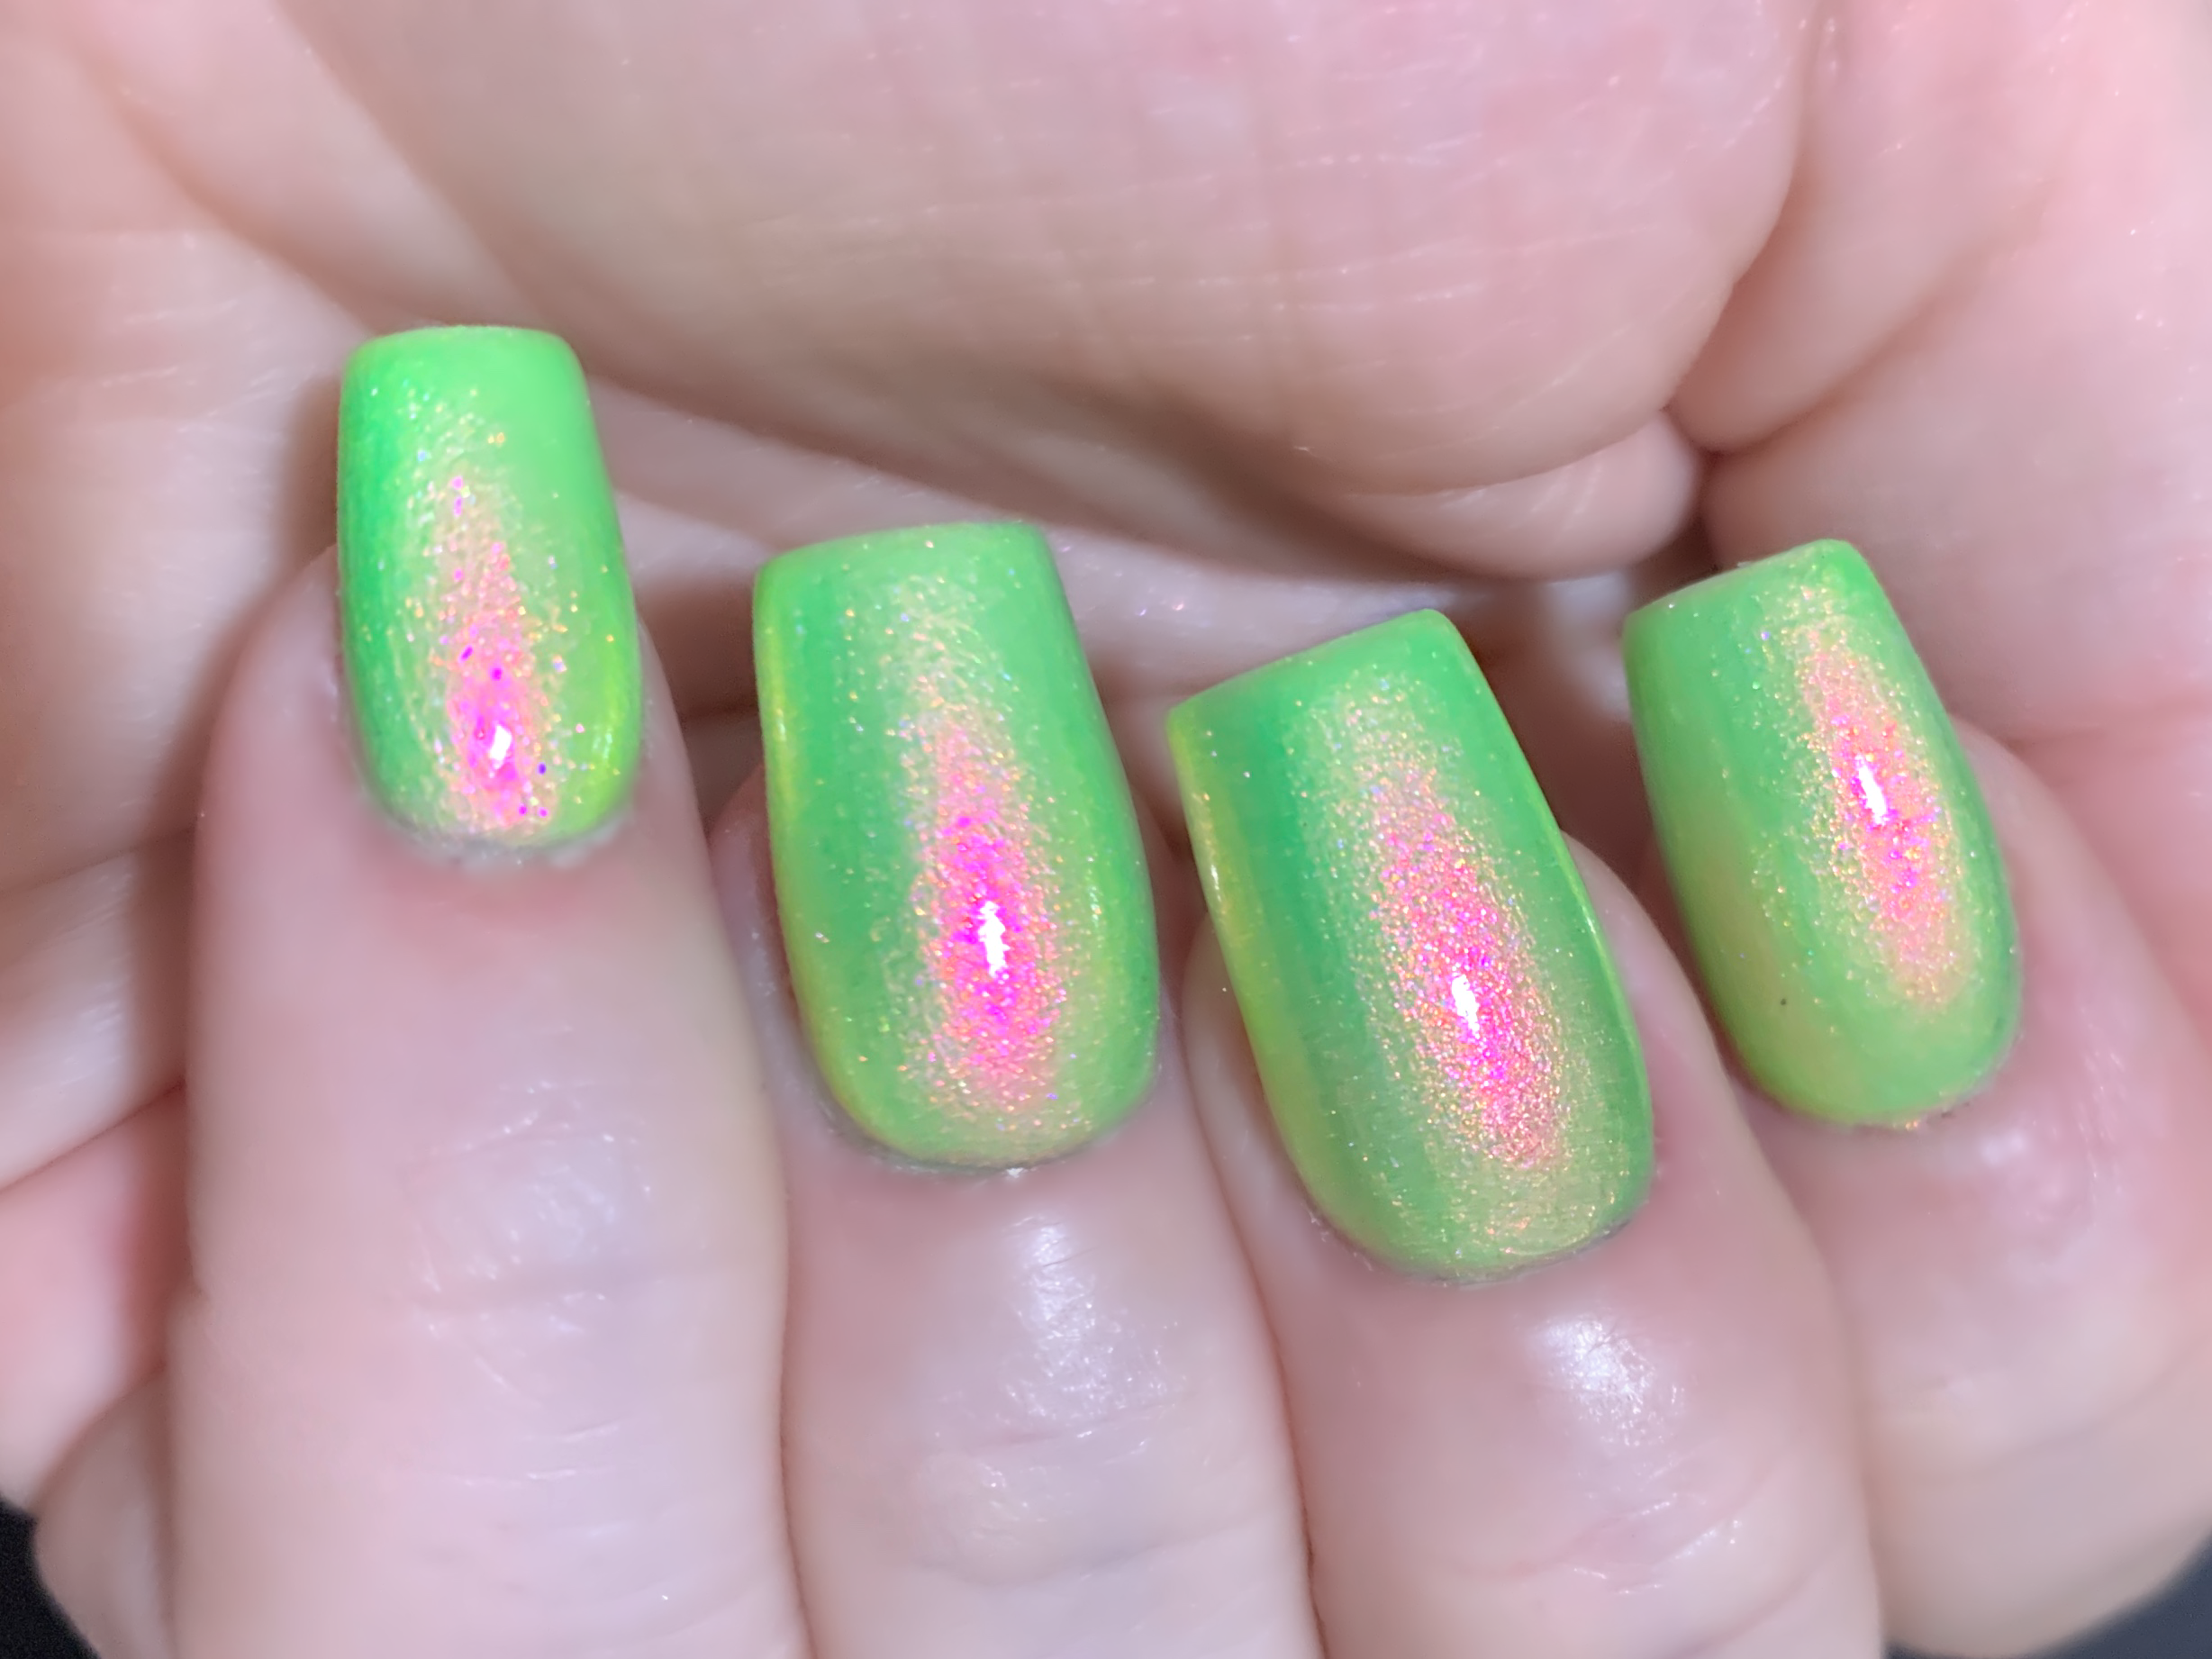 Neon Green Nail Polish Inspiration on Pinterest - wide 4